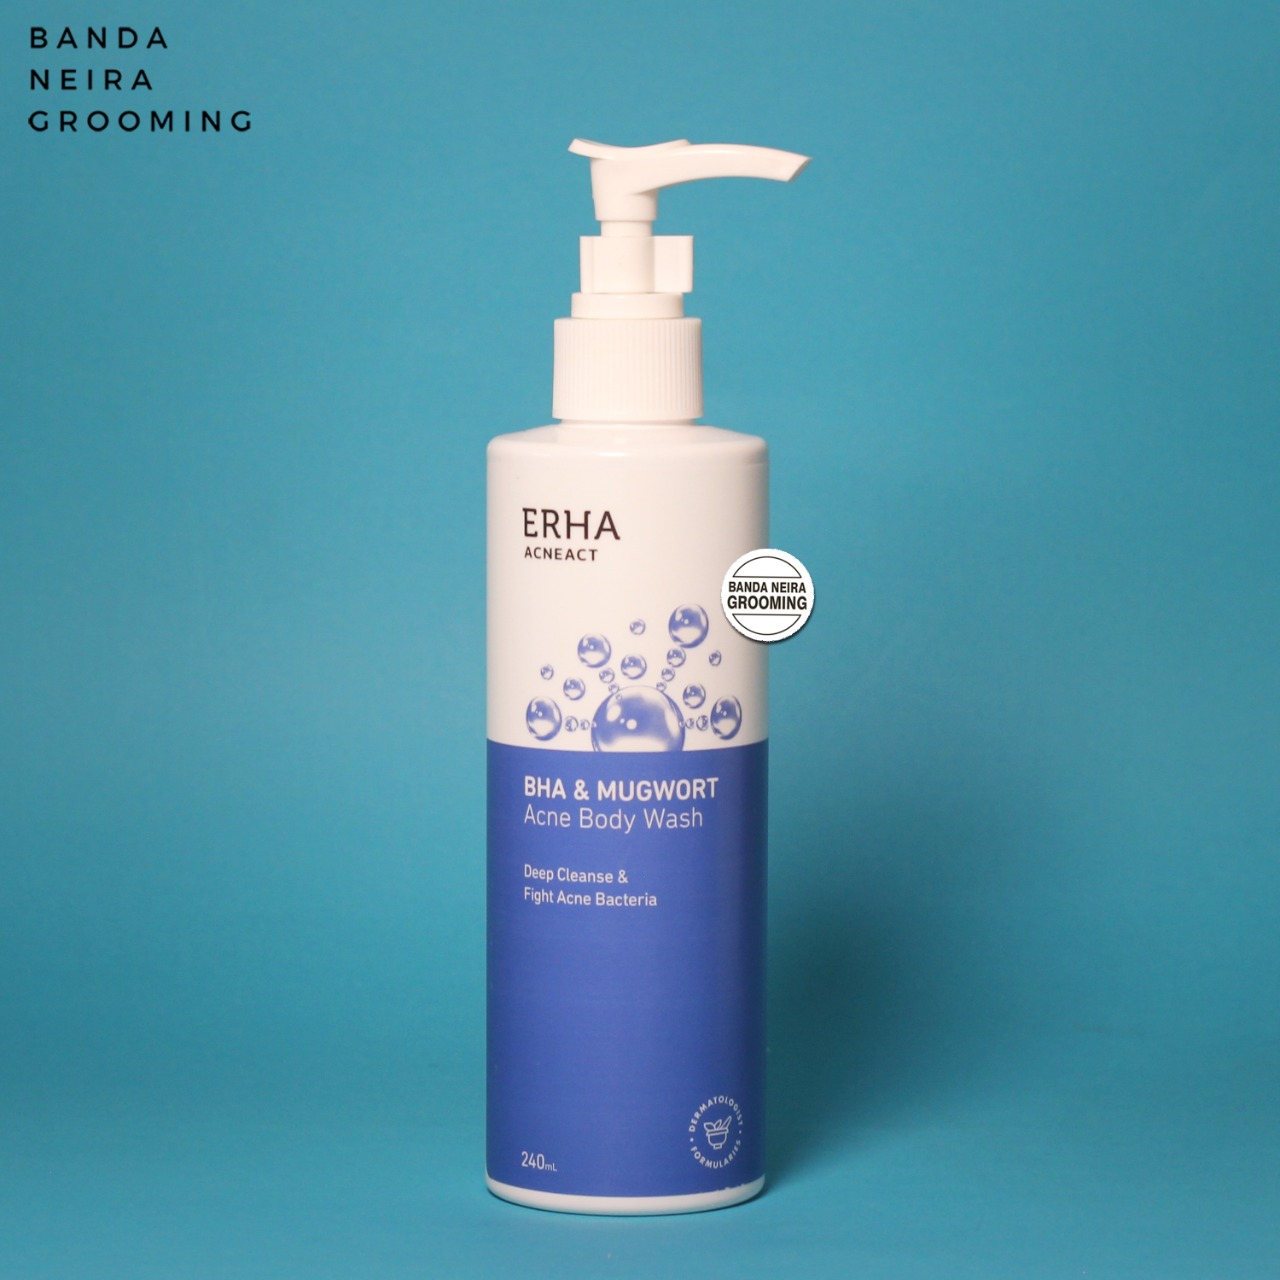 Erha AcneAct Acne Body Wash – Banda Neira Grooming